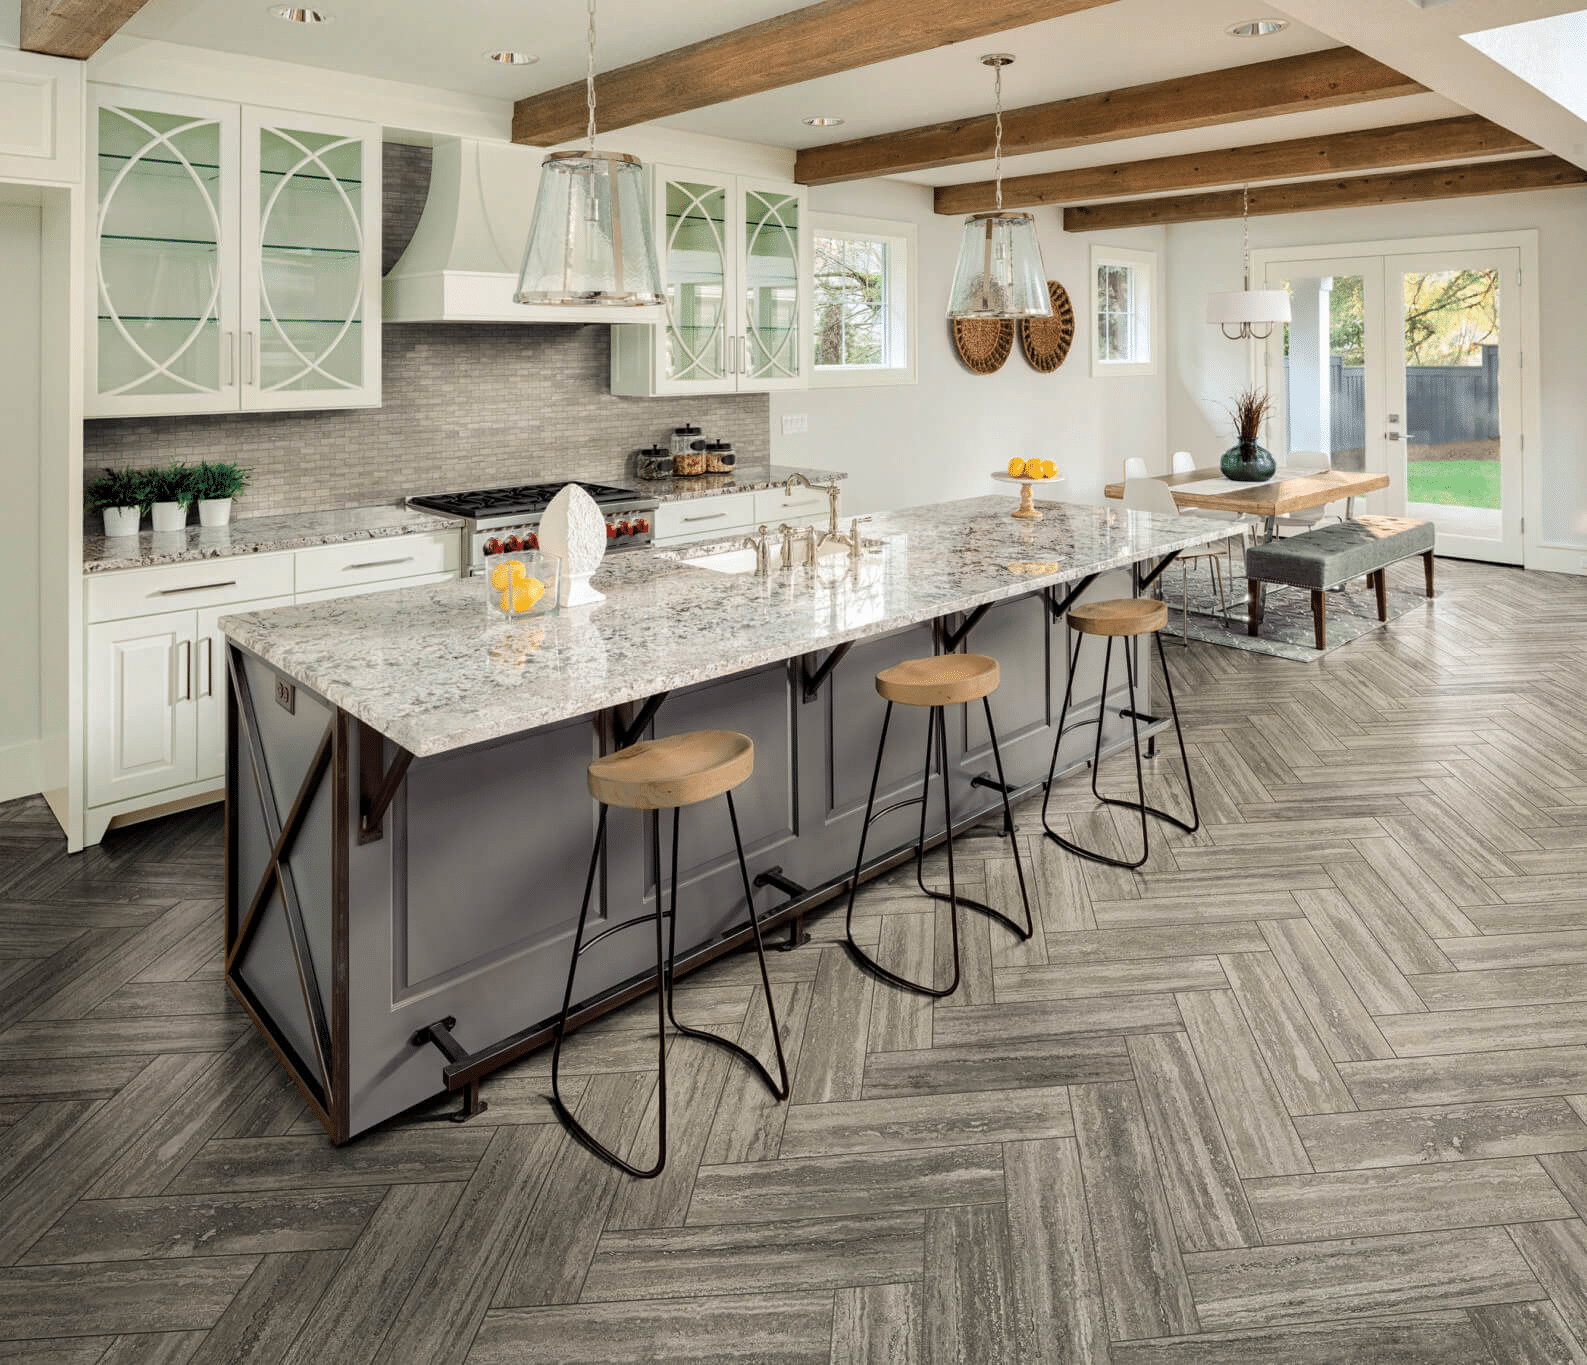 Wood-look mosaic tile kitchen backsplash in a running bond pattern